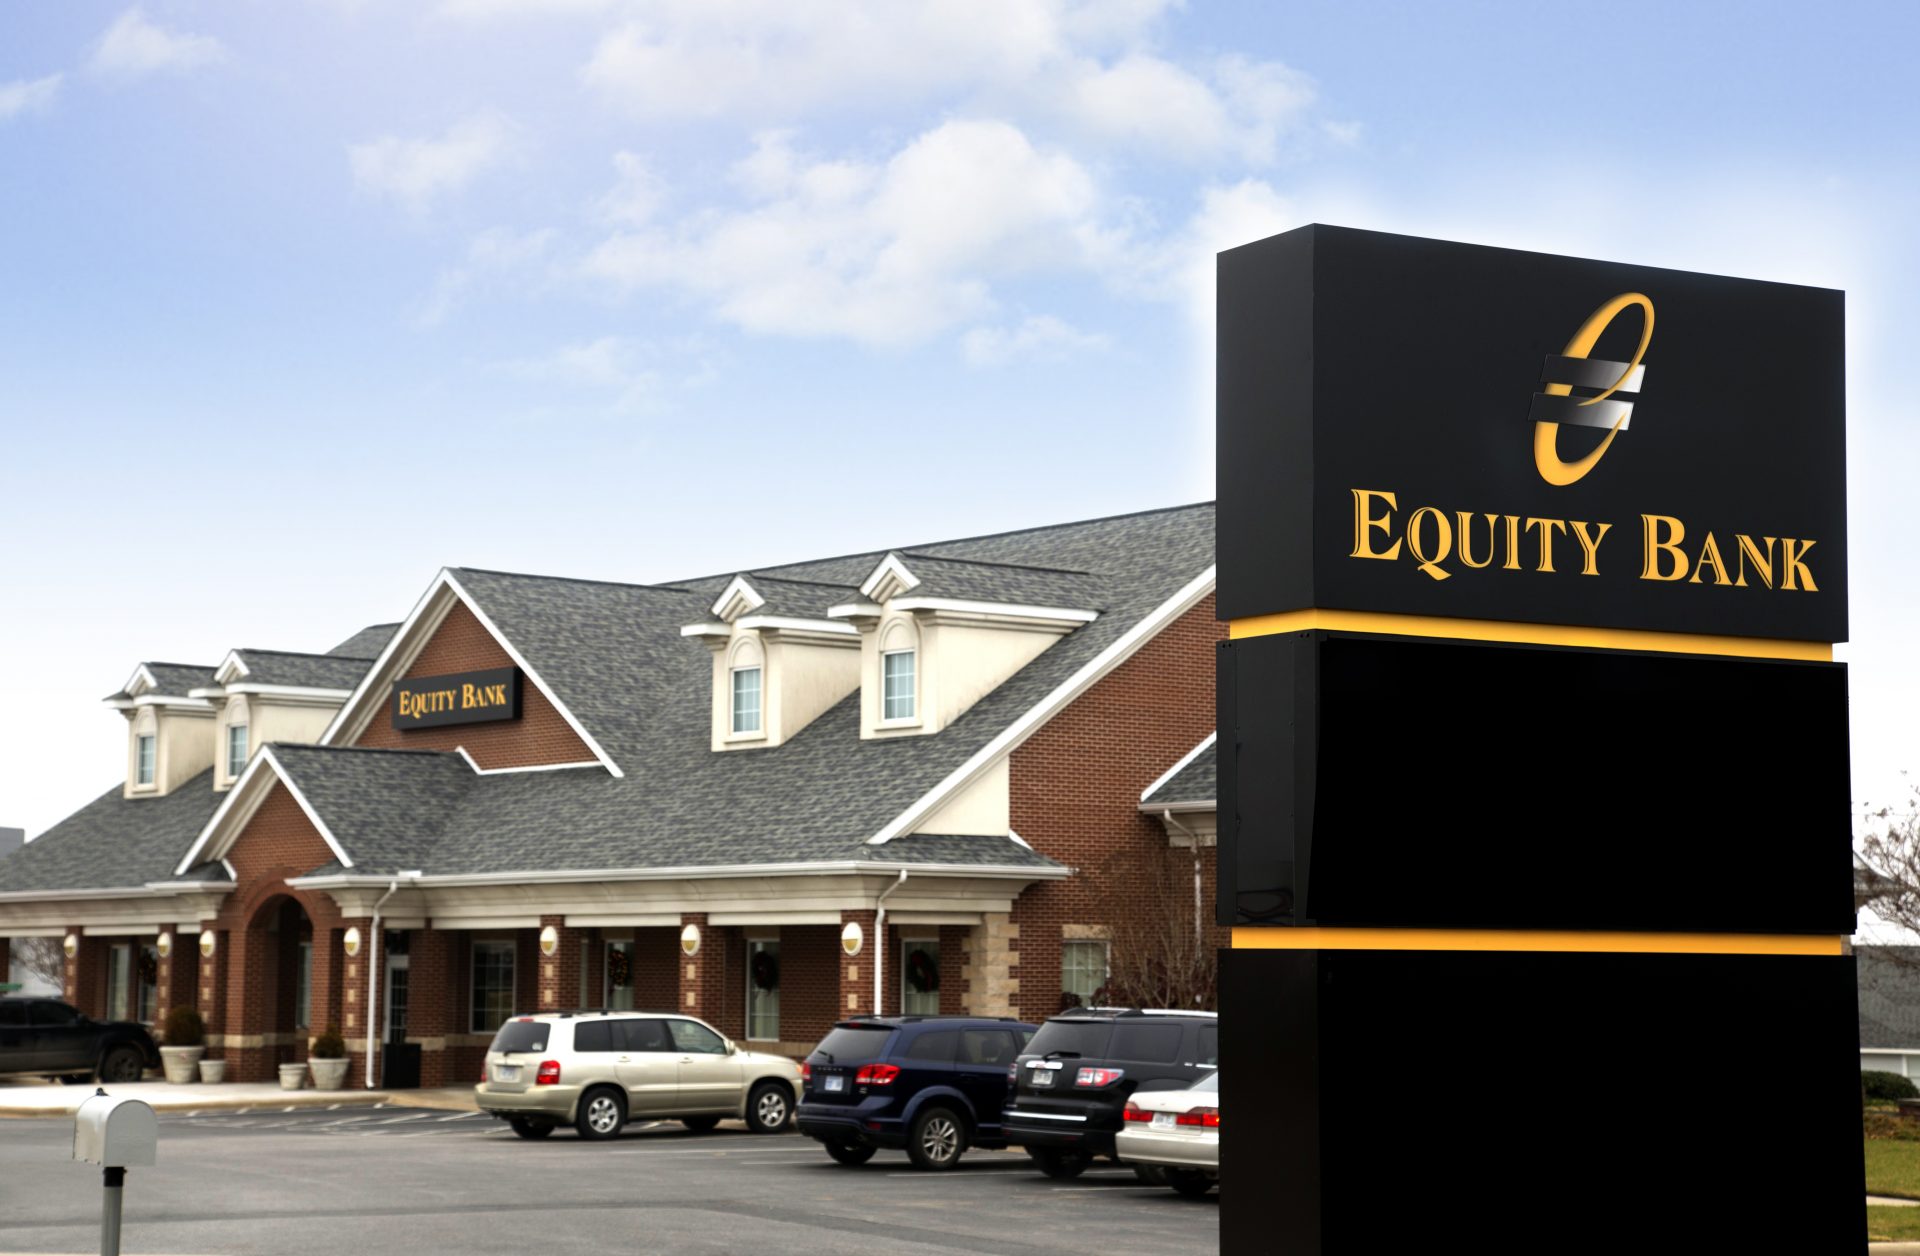 Equity Bank Berryville branch exterior.